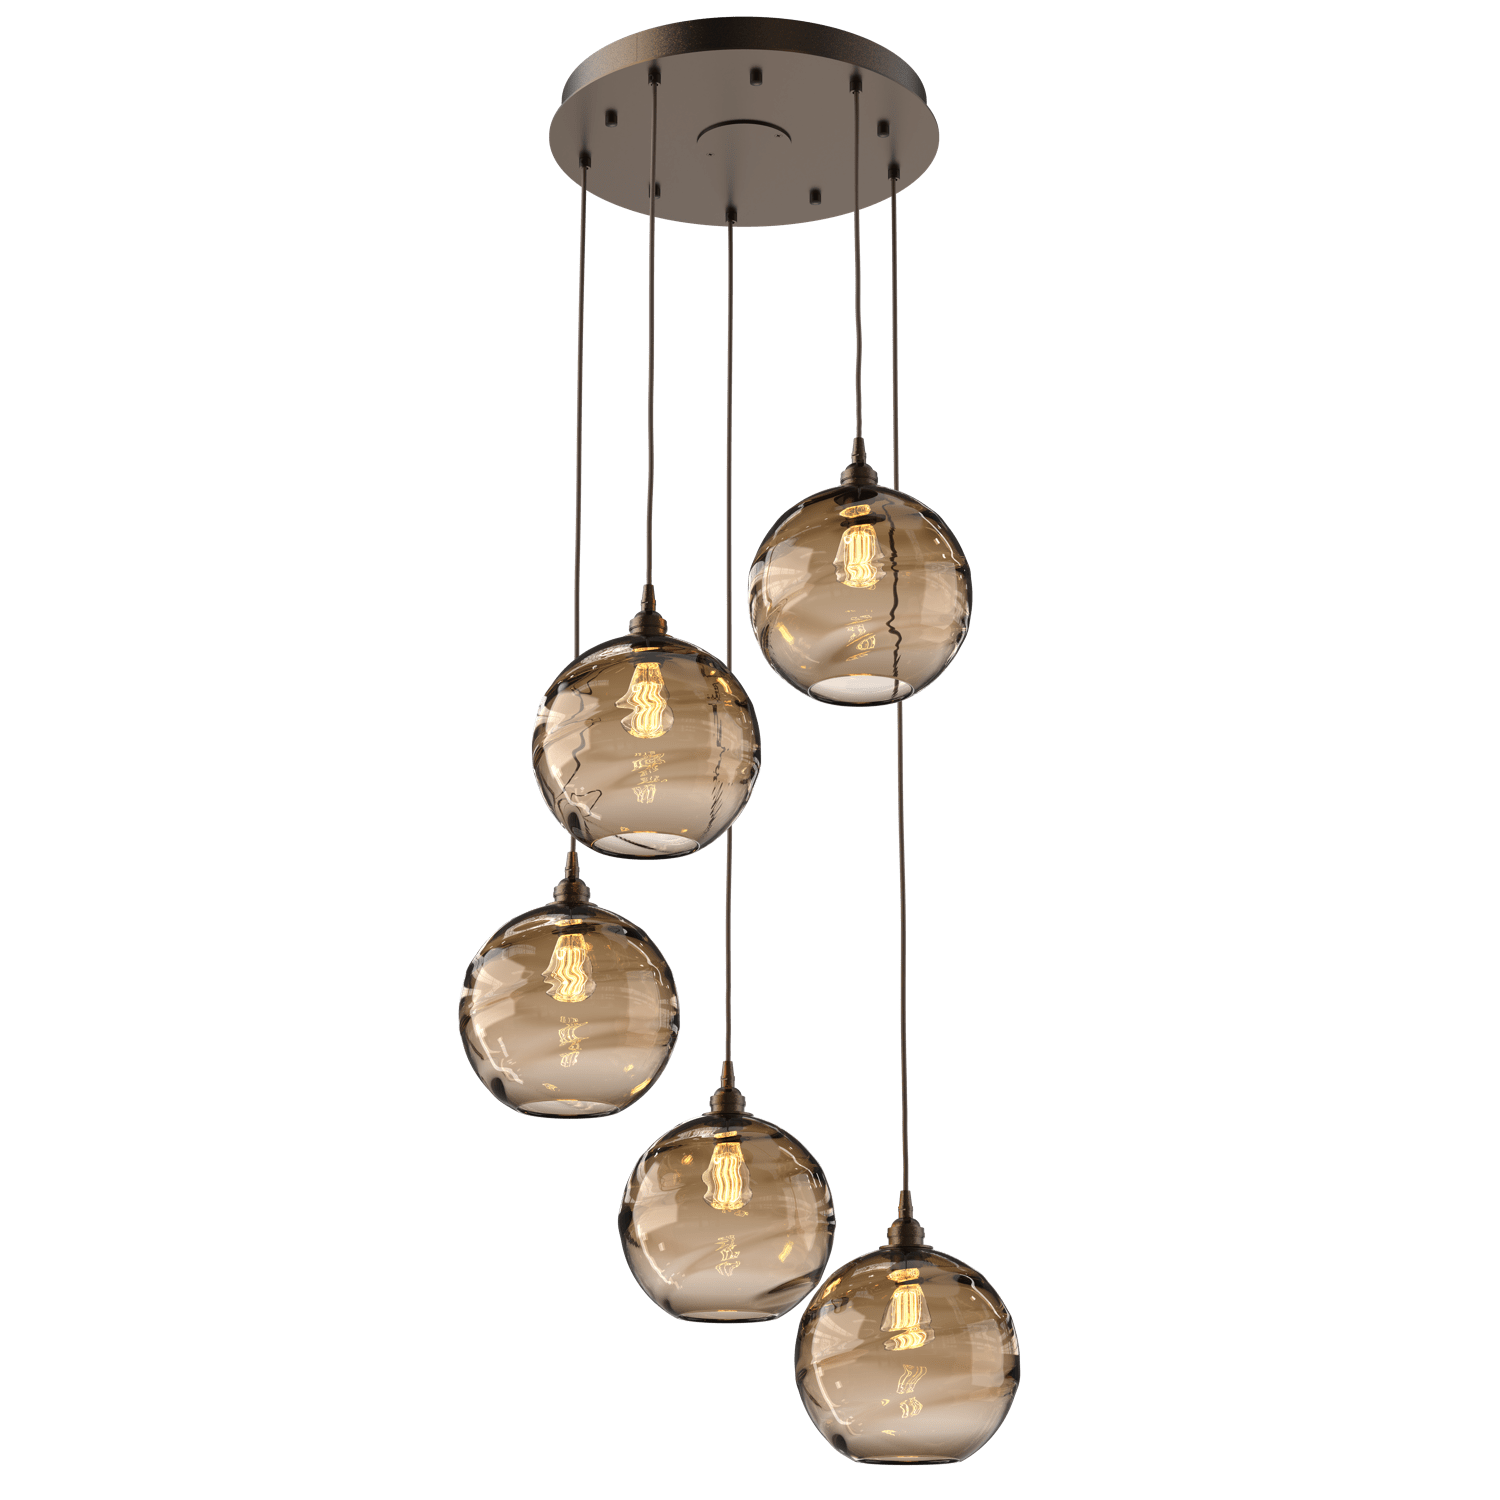 CHB0047-05-FB-OB-Hammerton-Studio-Optic-Blown-Glass-Terra-5-light-round-pendant-chandelier-with-flat-bronze-finish-and-optic-bronze-blown-glass-shades-and-incandescent-lamping